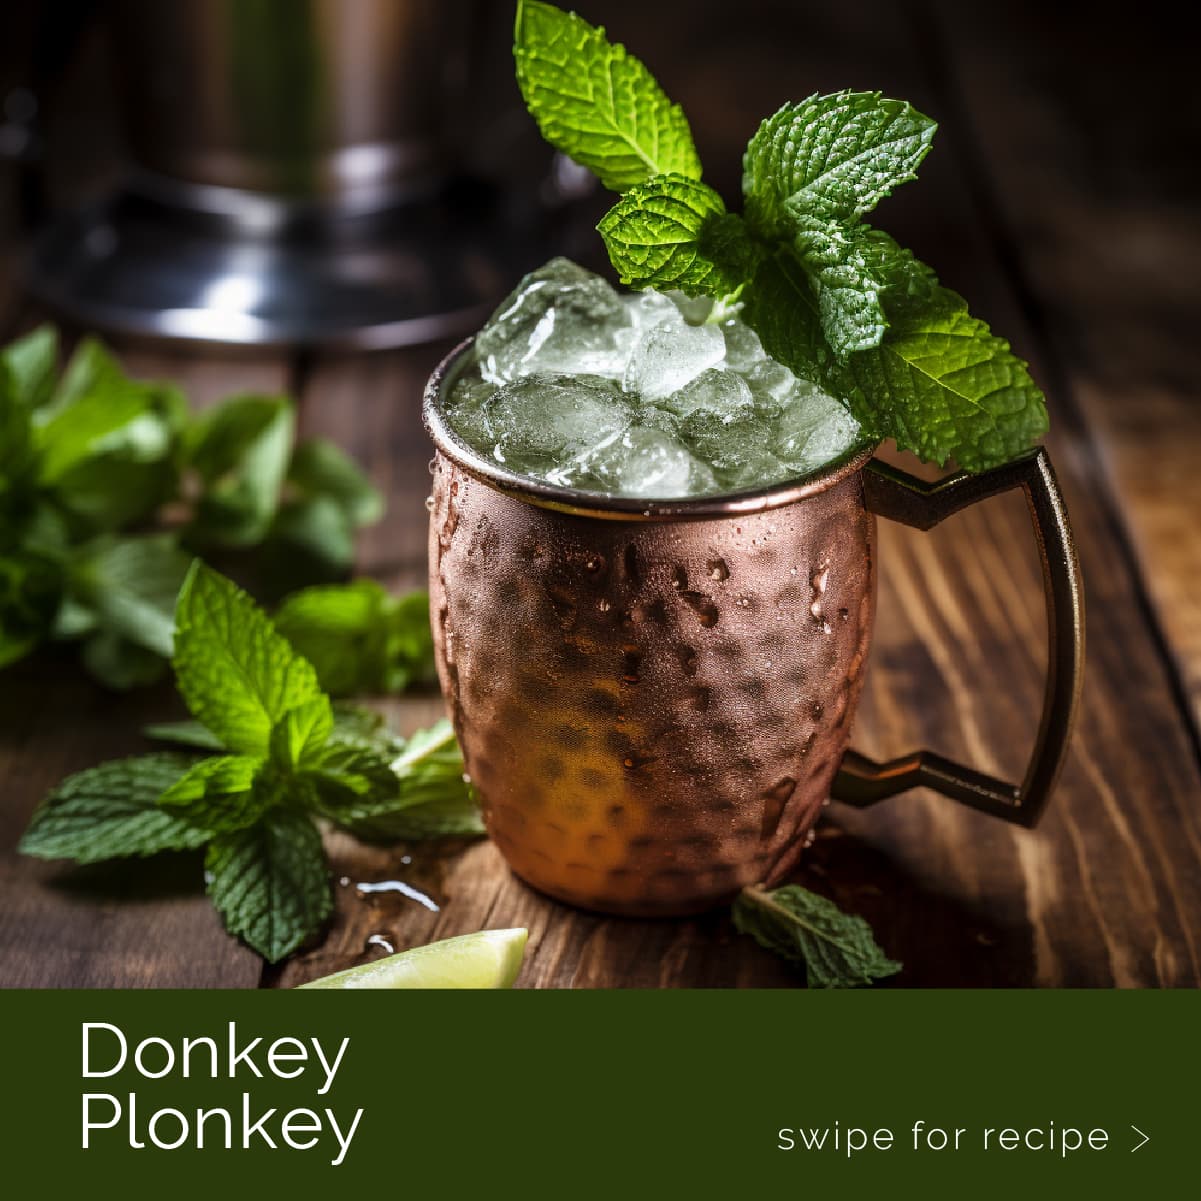 A Donkey Plonkey cocktail